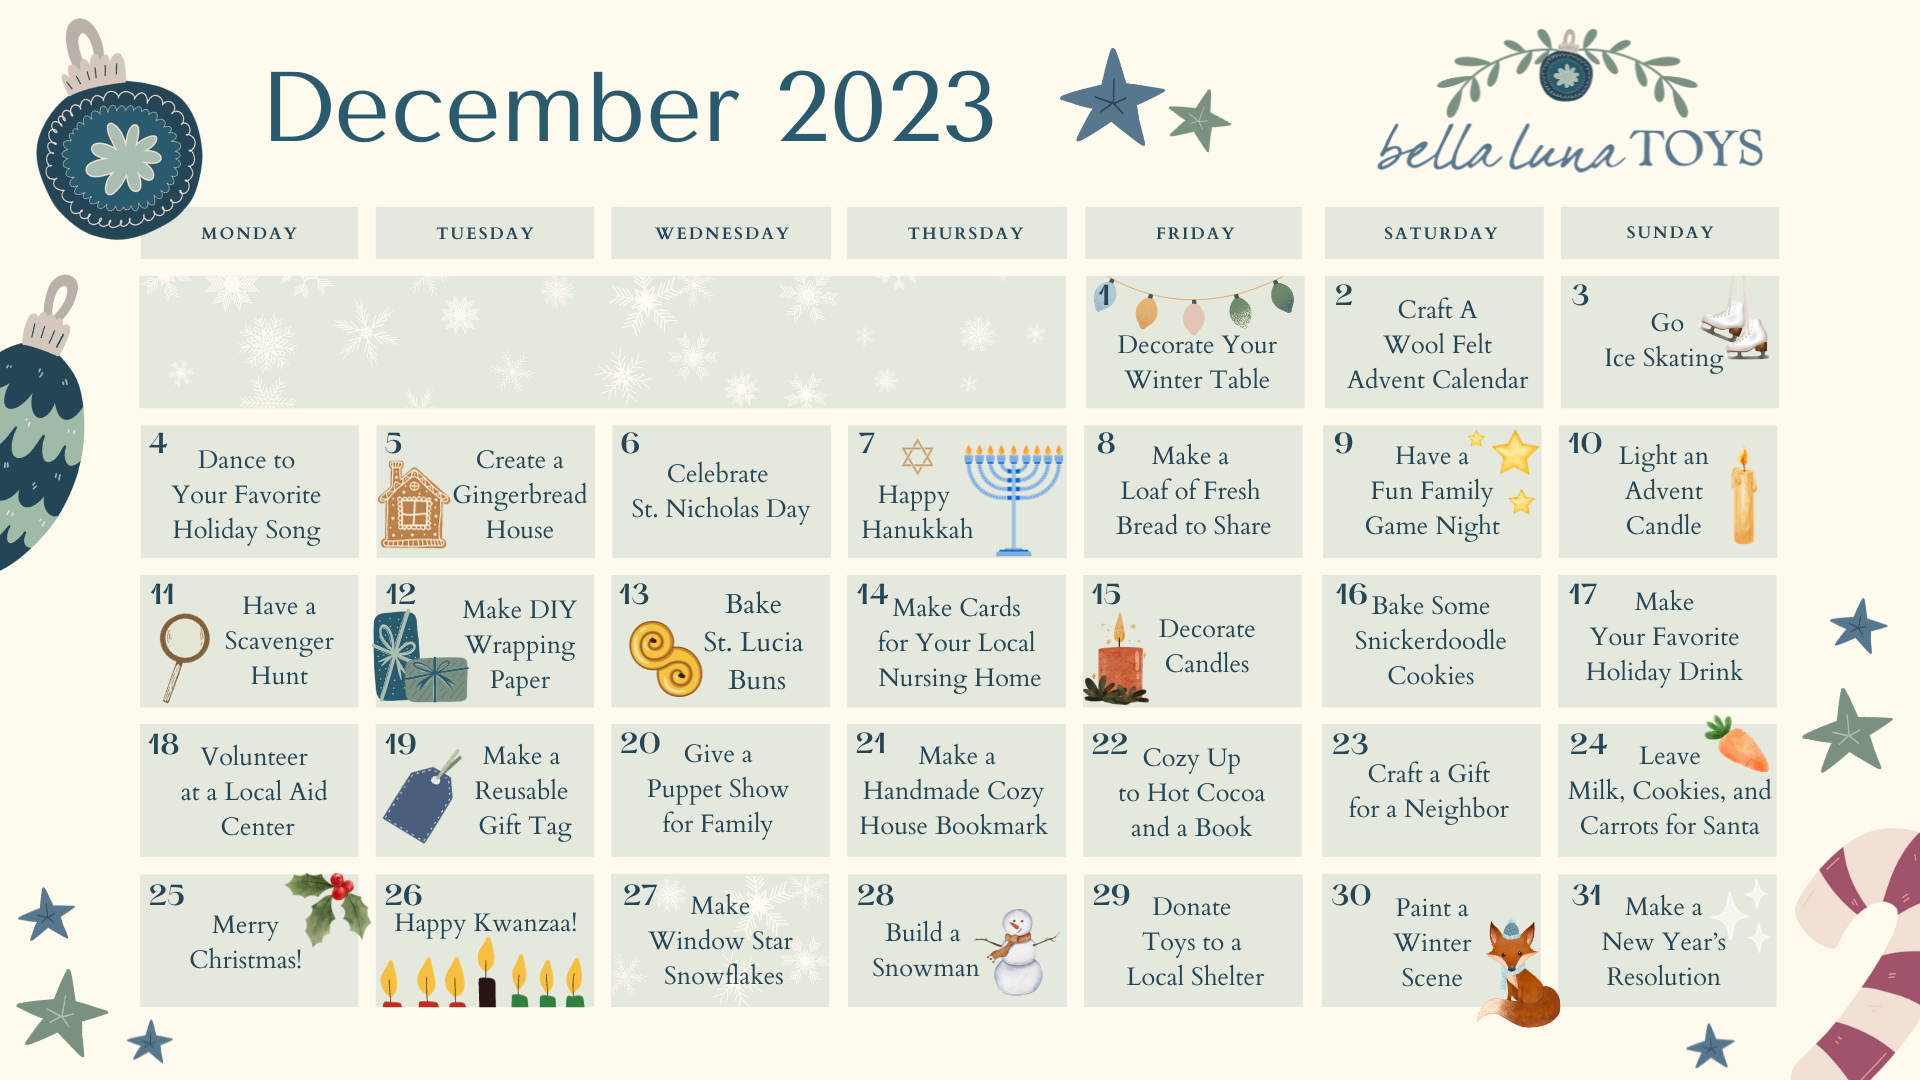 The 2023 December Bella Luna Activity Calendar.